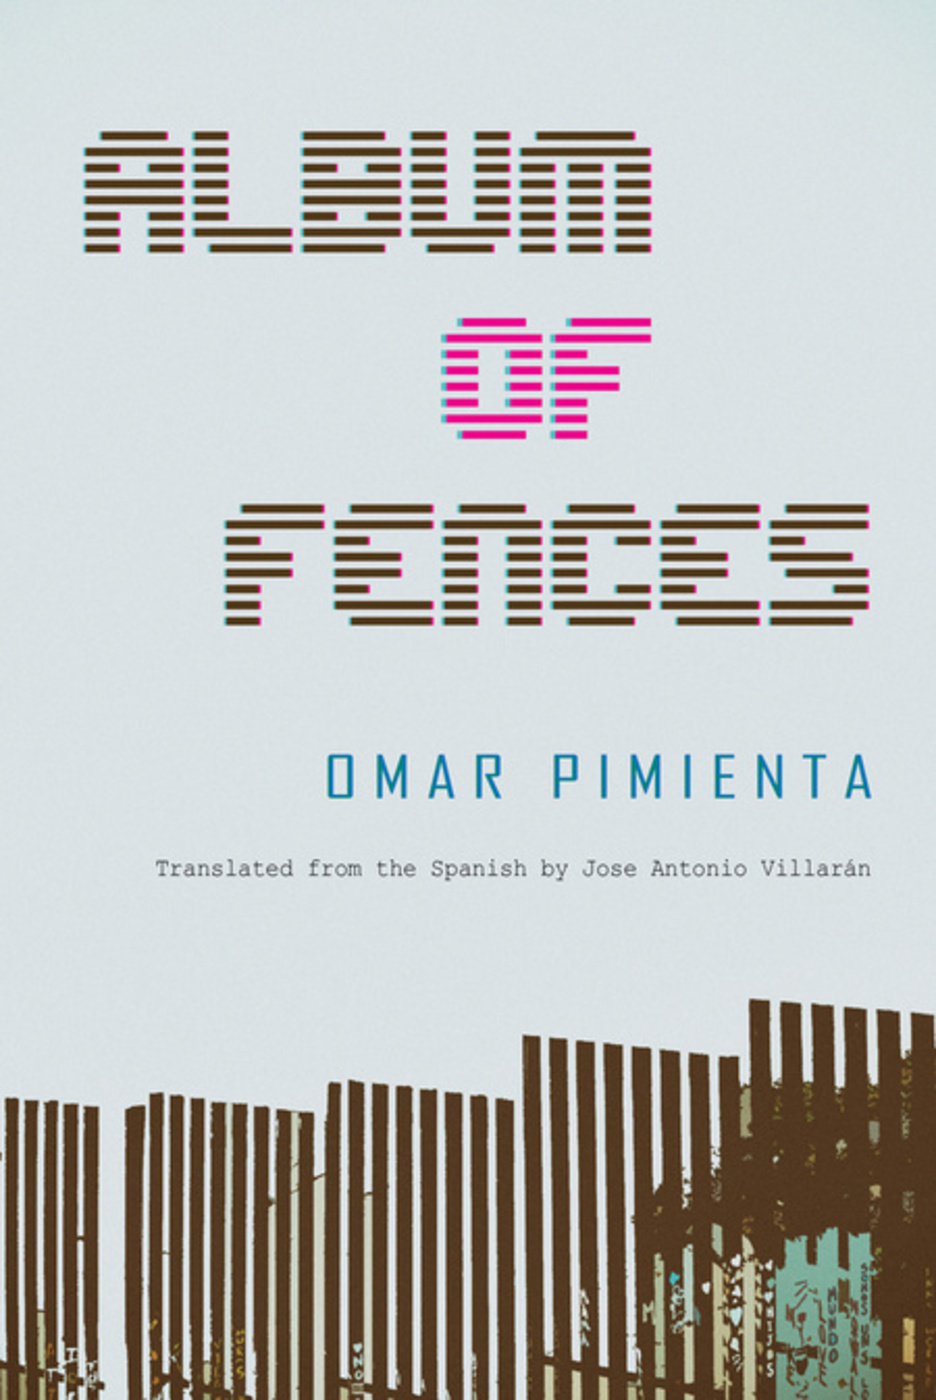 Album of fences by omar pimienta rgb web